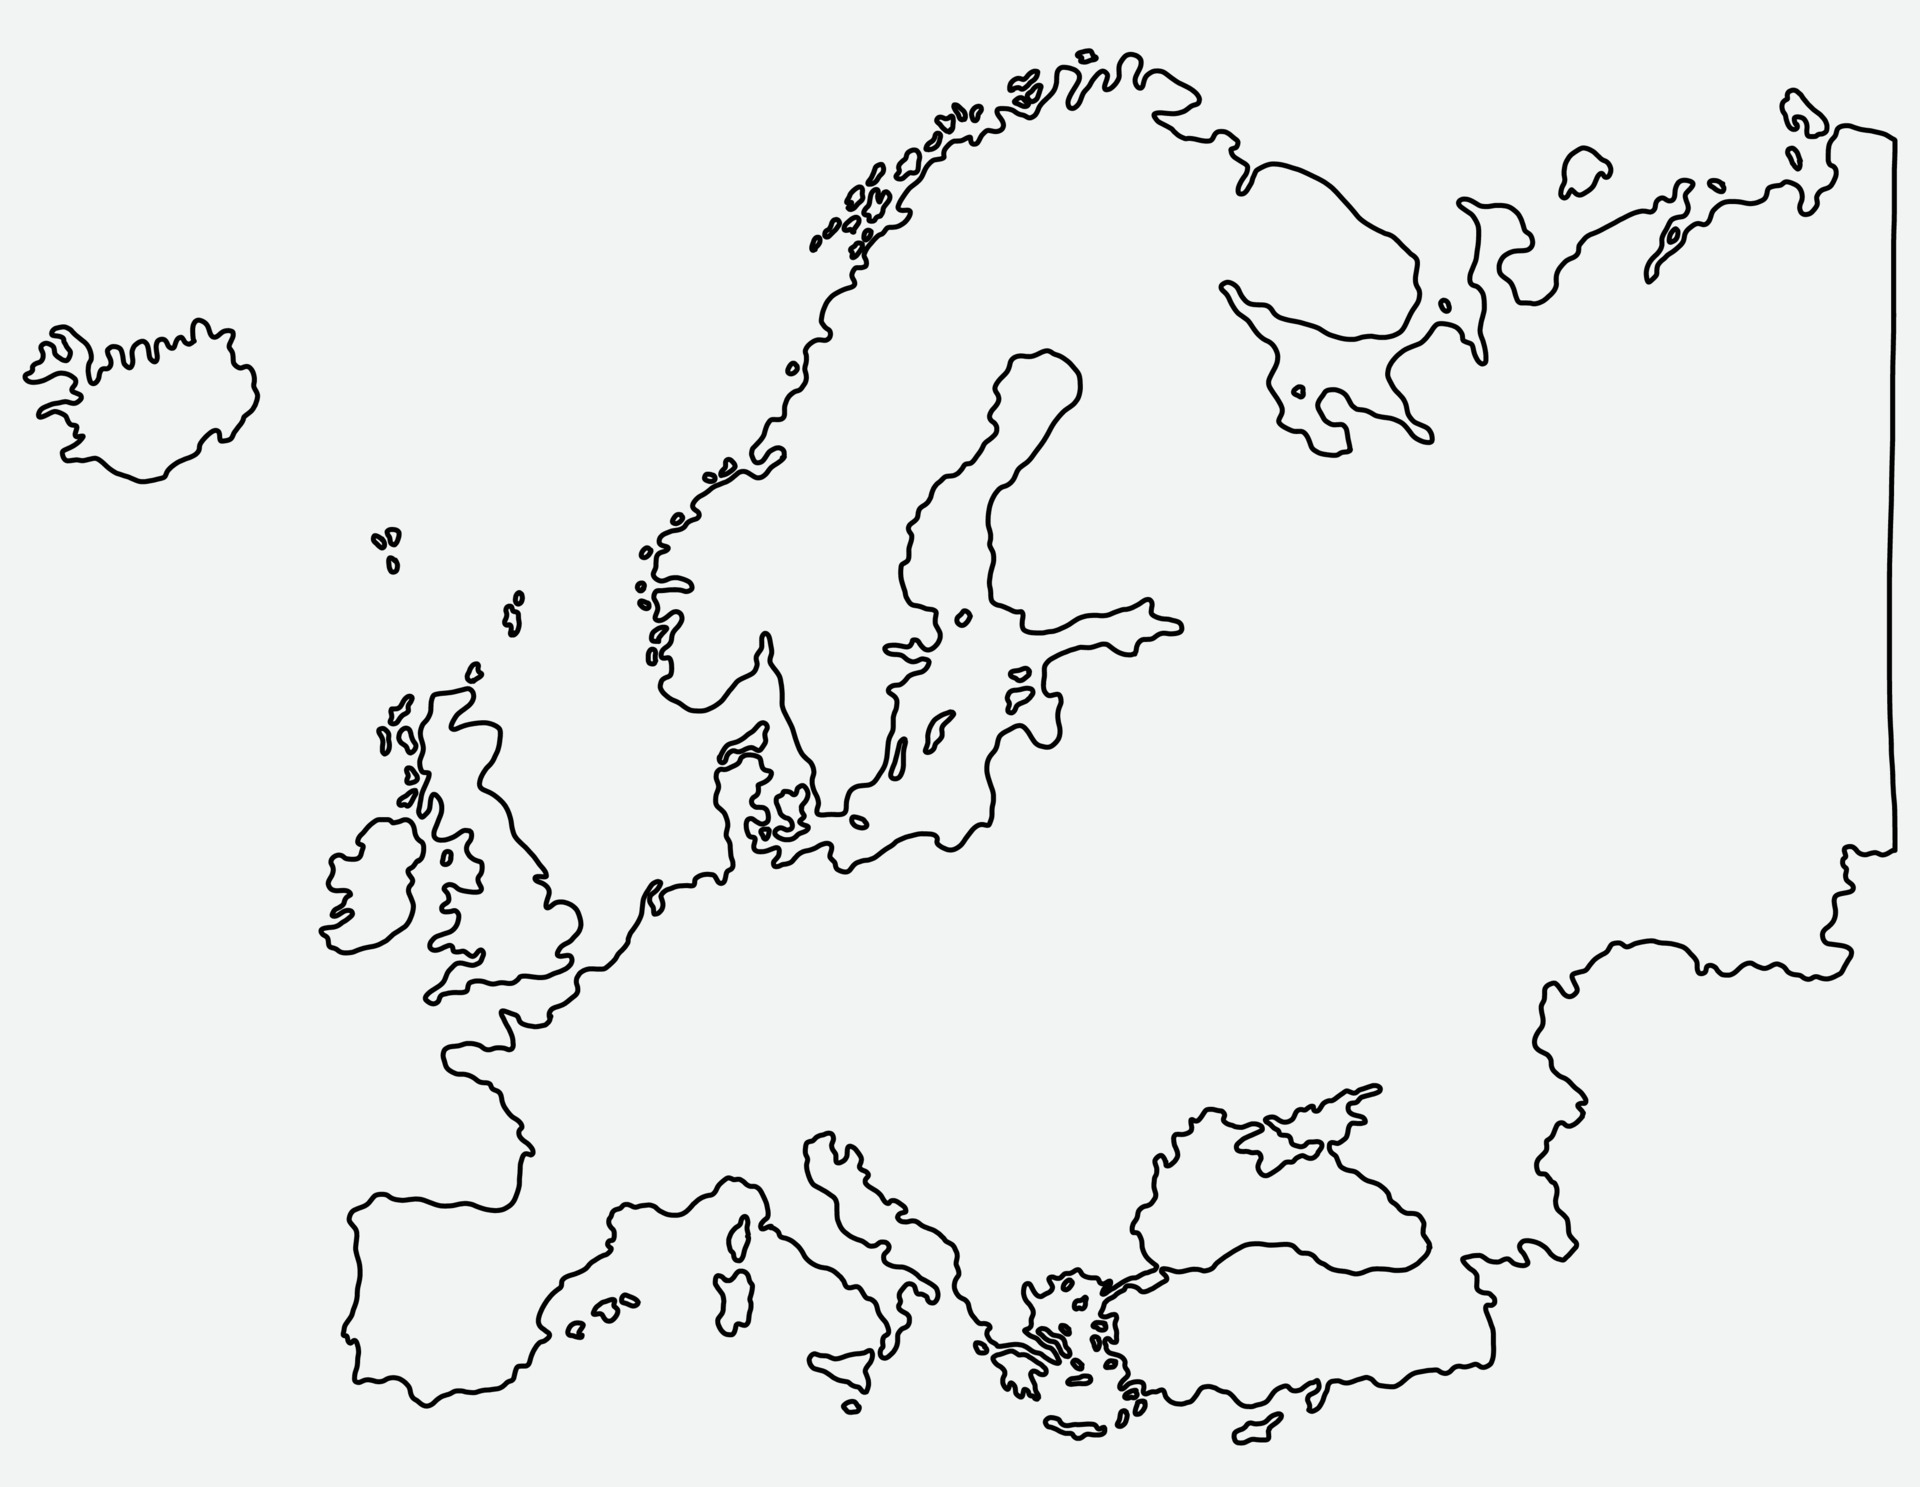 Europe Map Flag by nickyyckin on DeviantArt